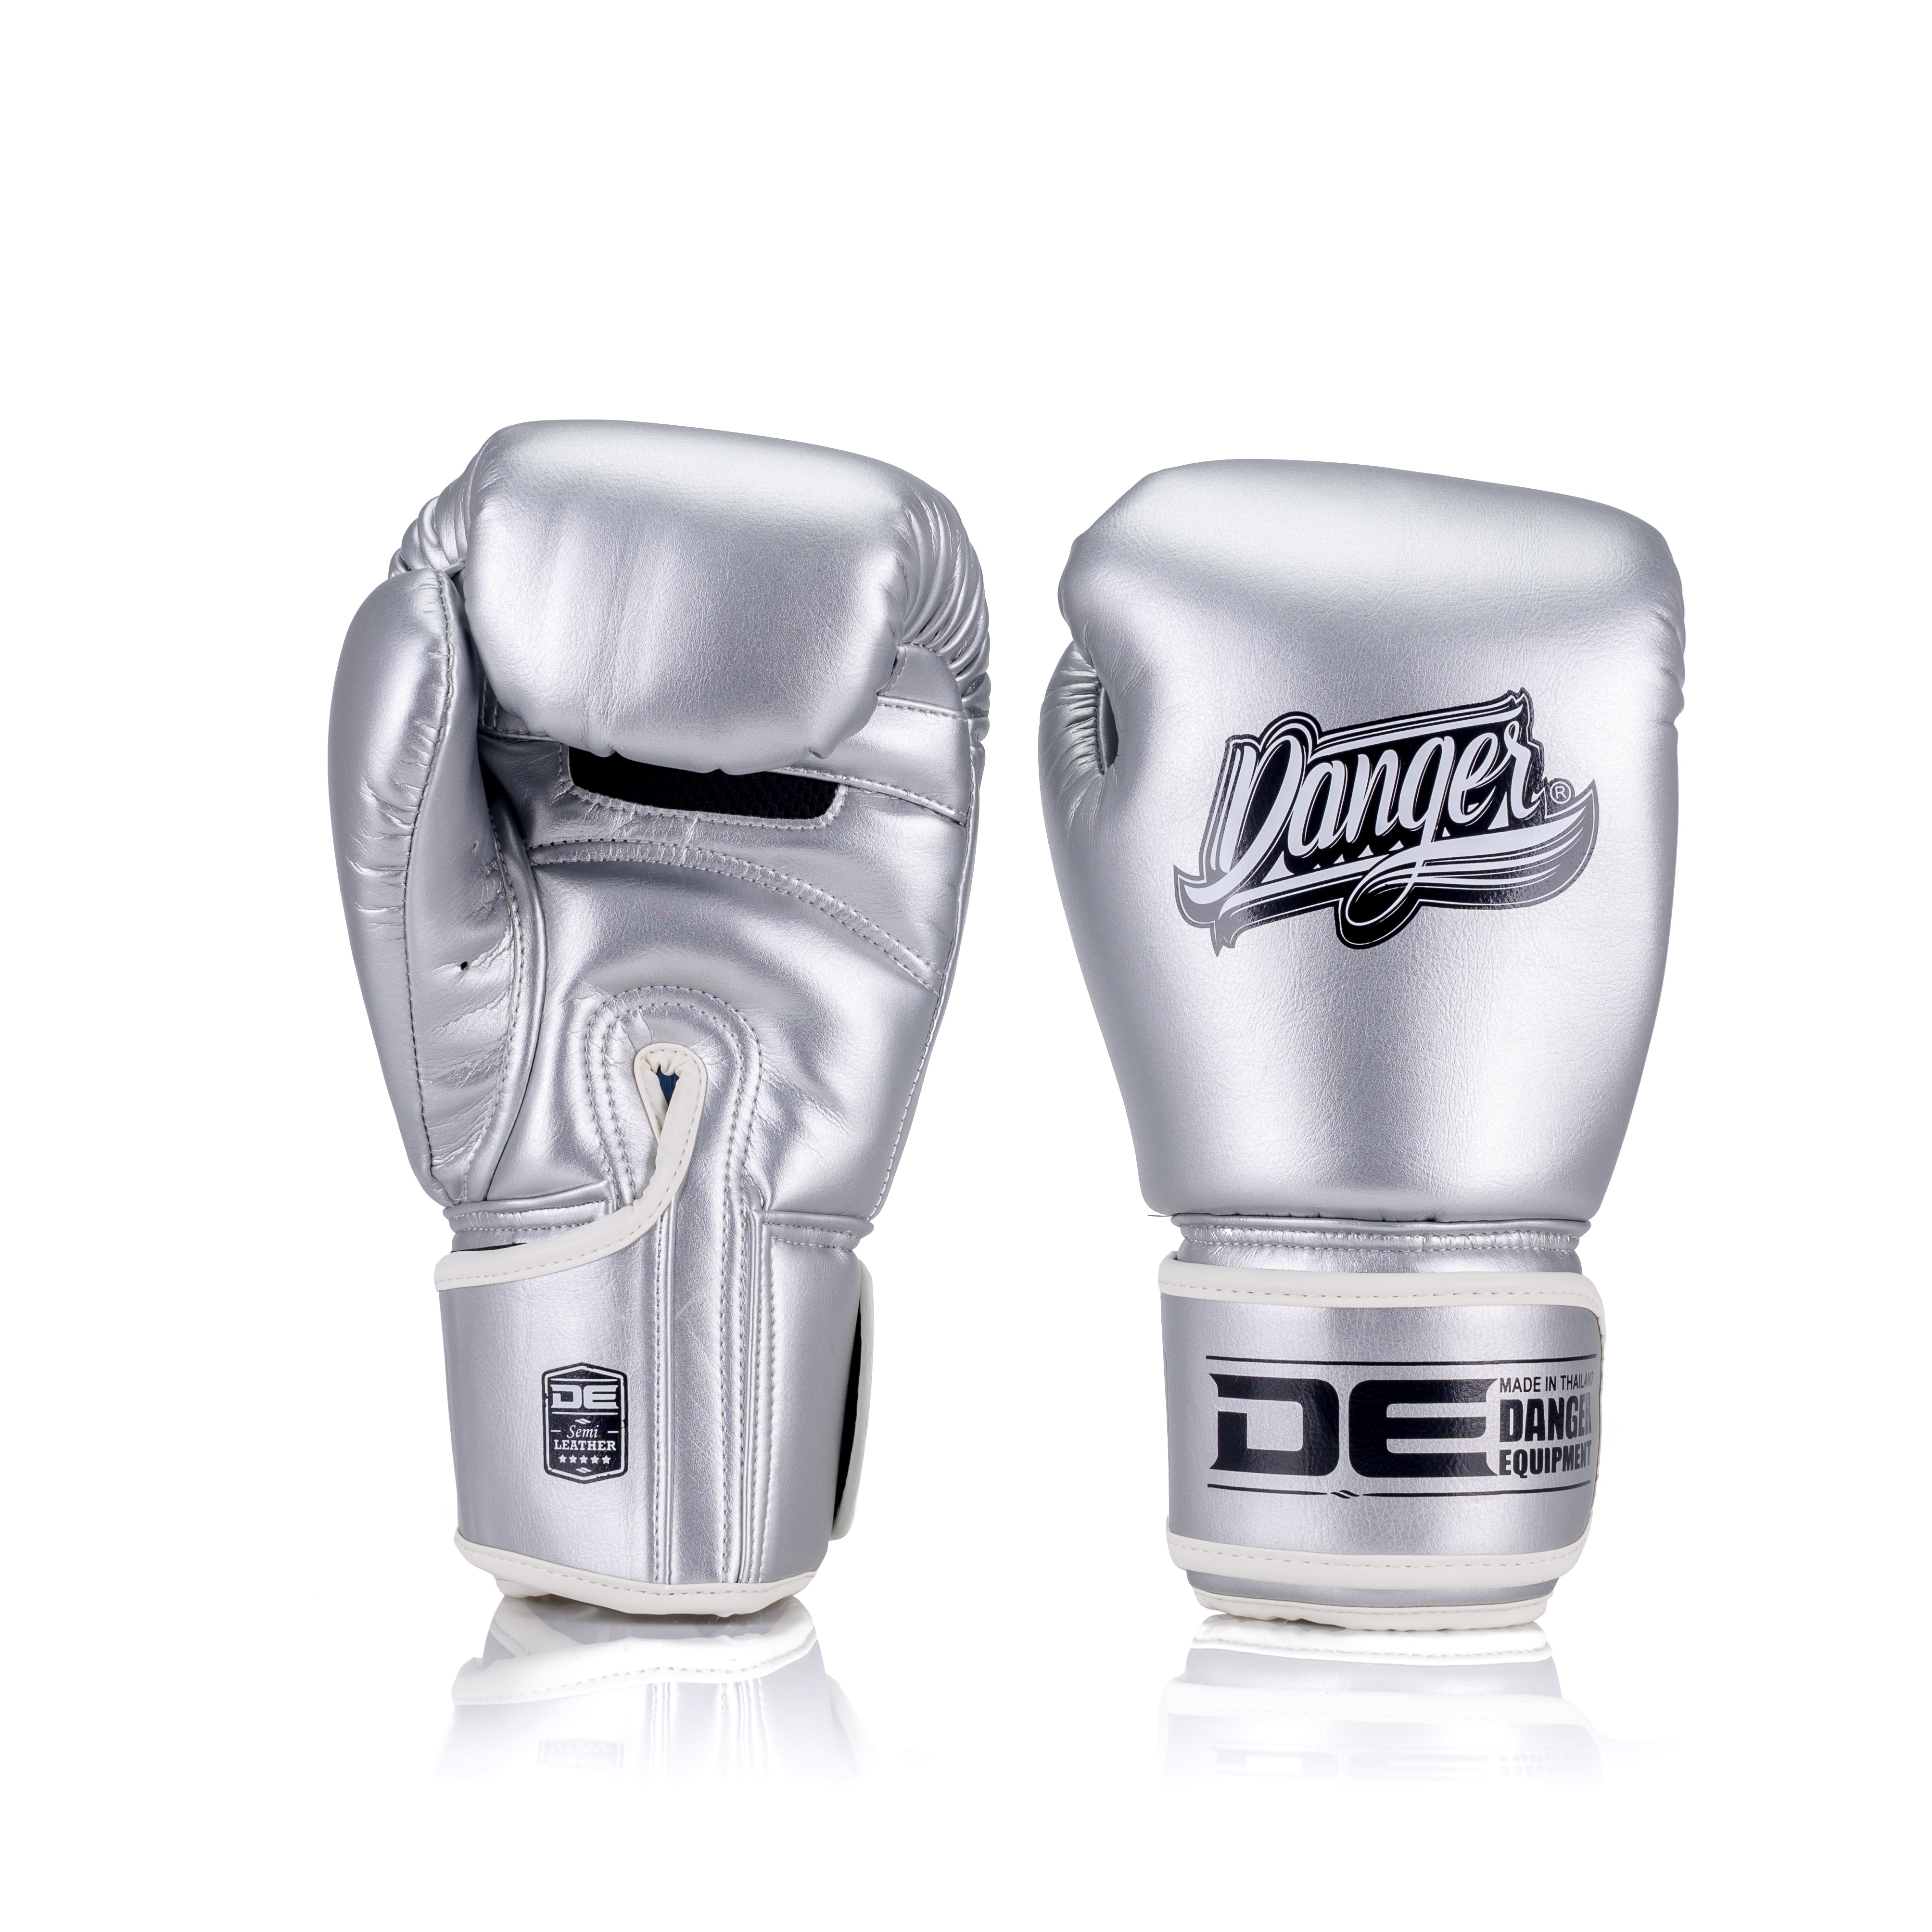 Danger Equipment Classic Thai Metallic Boxing Gloves photo image